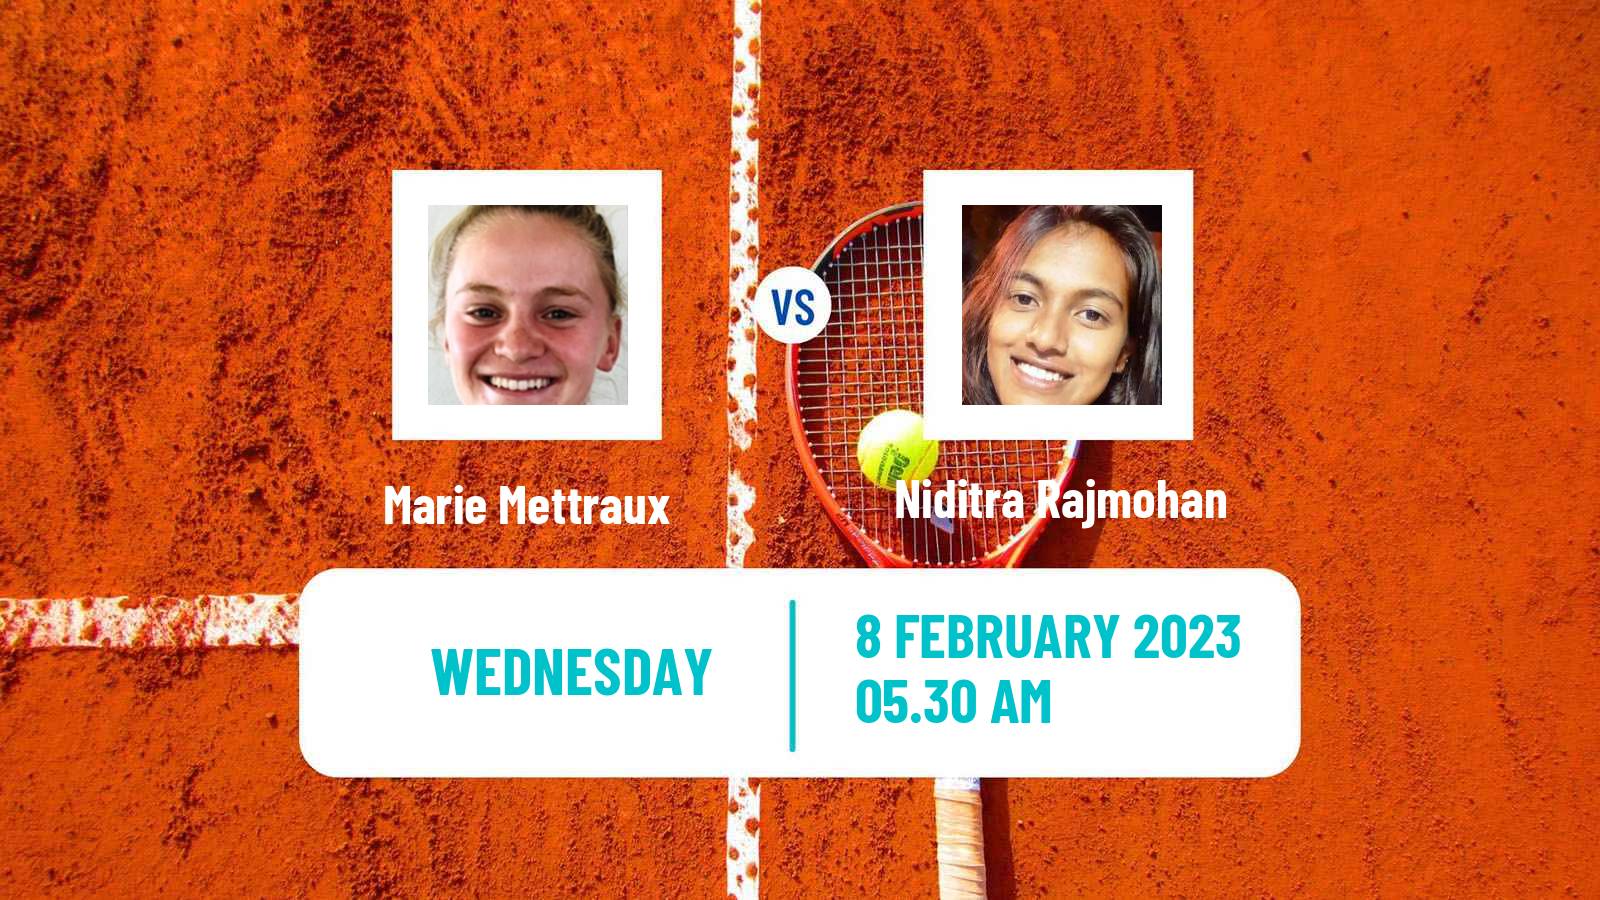 Tennis ITF Tournaments Marie Mettraux - Niditra Rajmohan